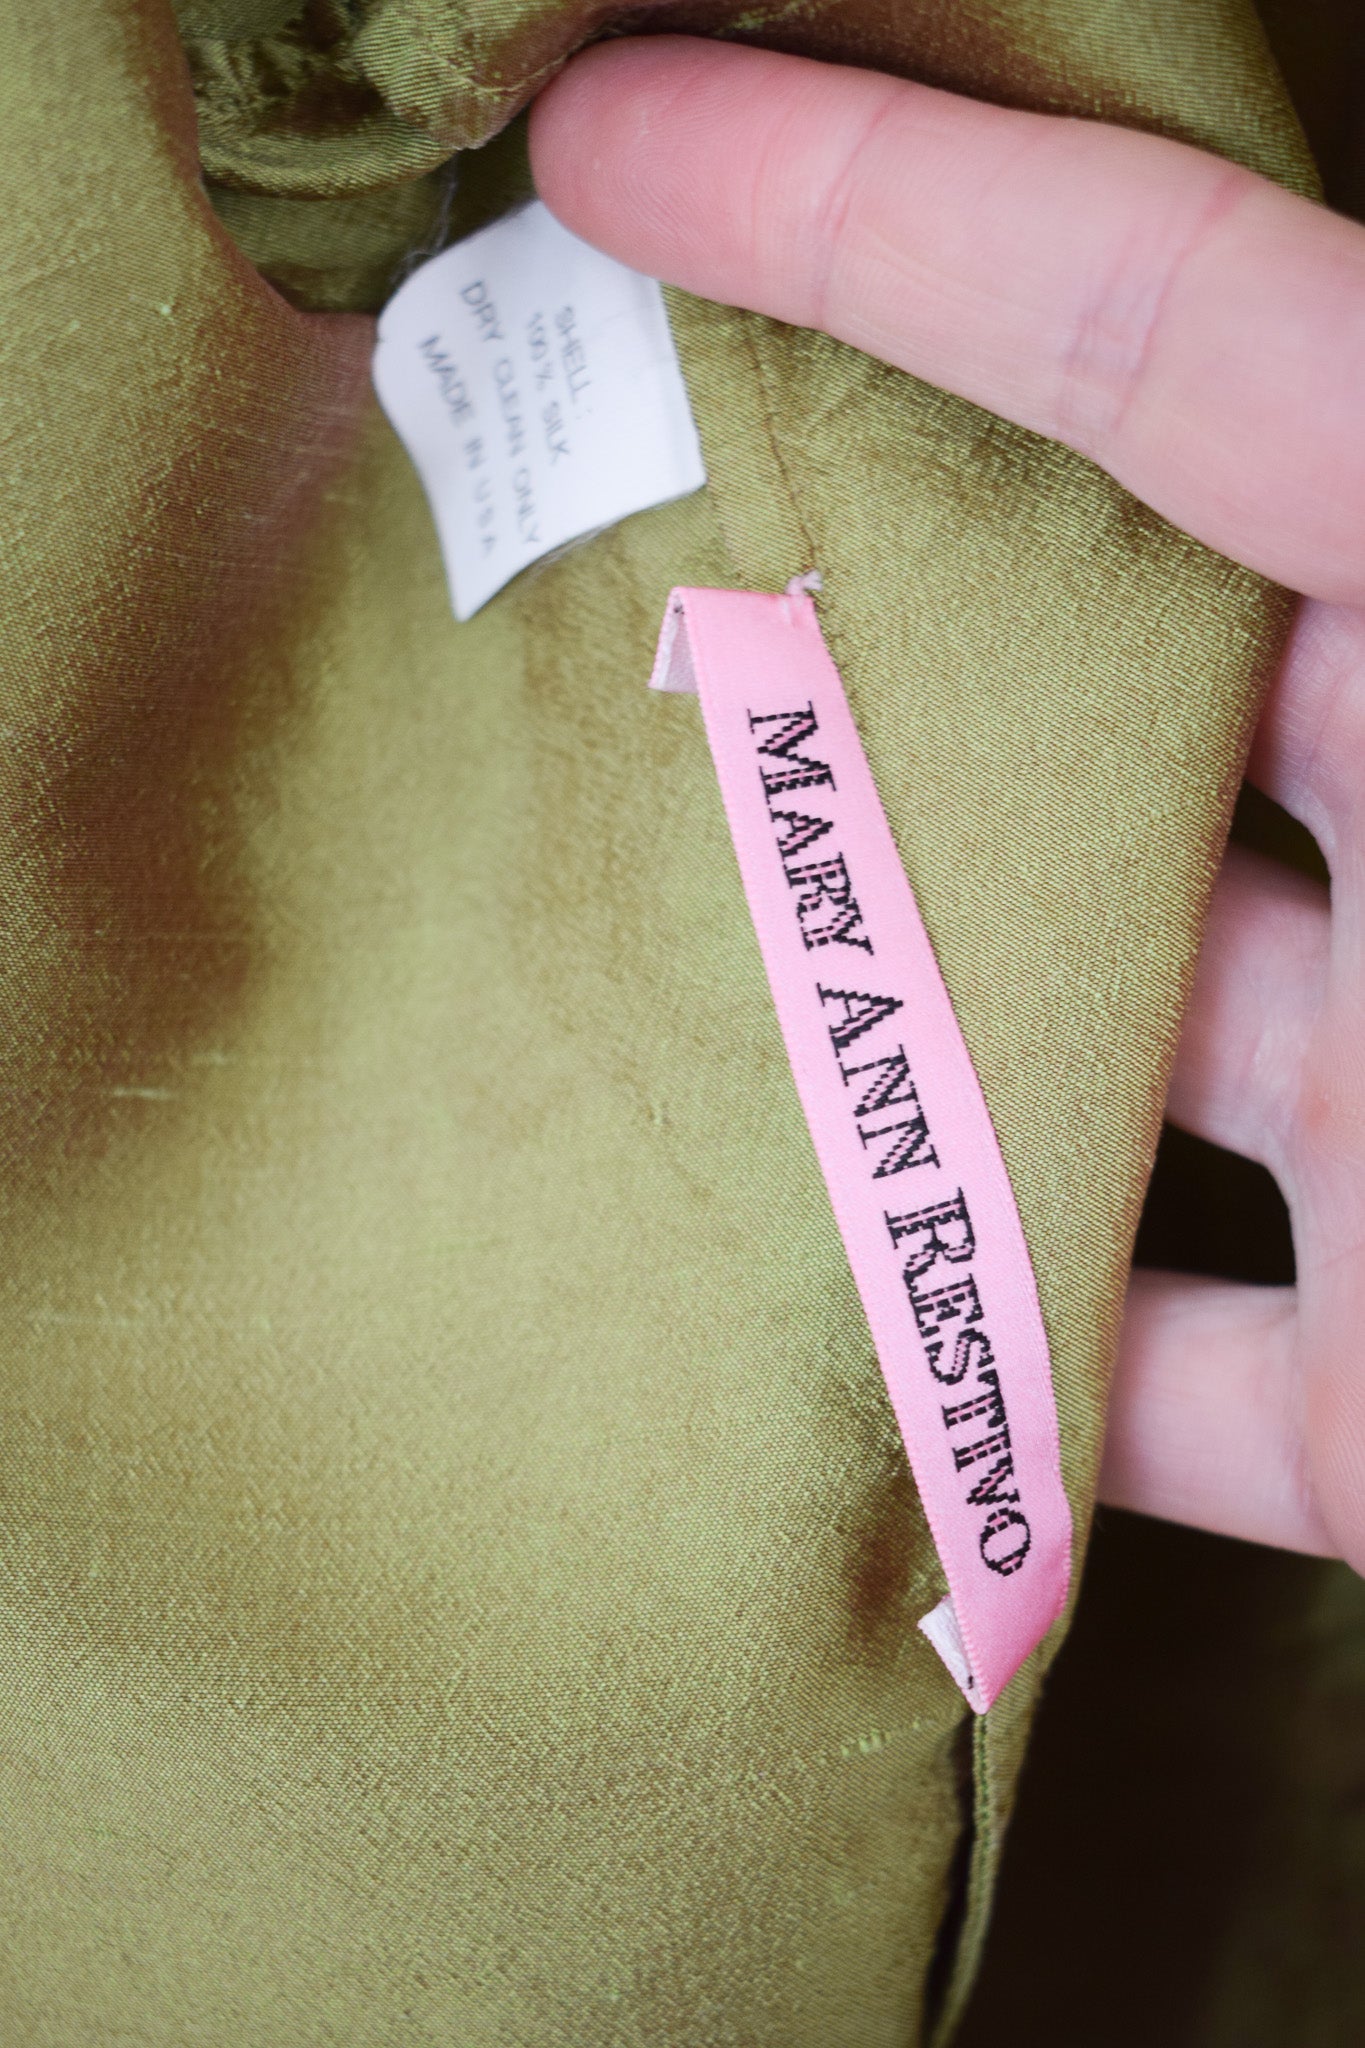 Mary Ann Restivo Iridescent Green Silk Jacket | OS